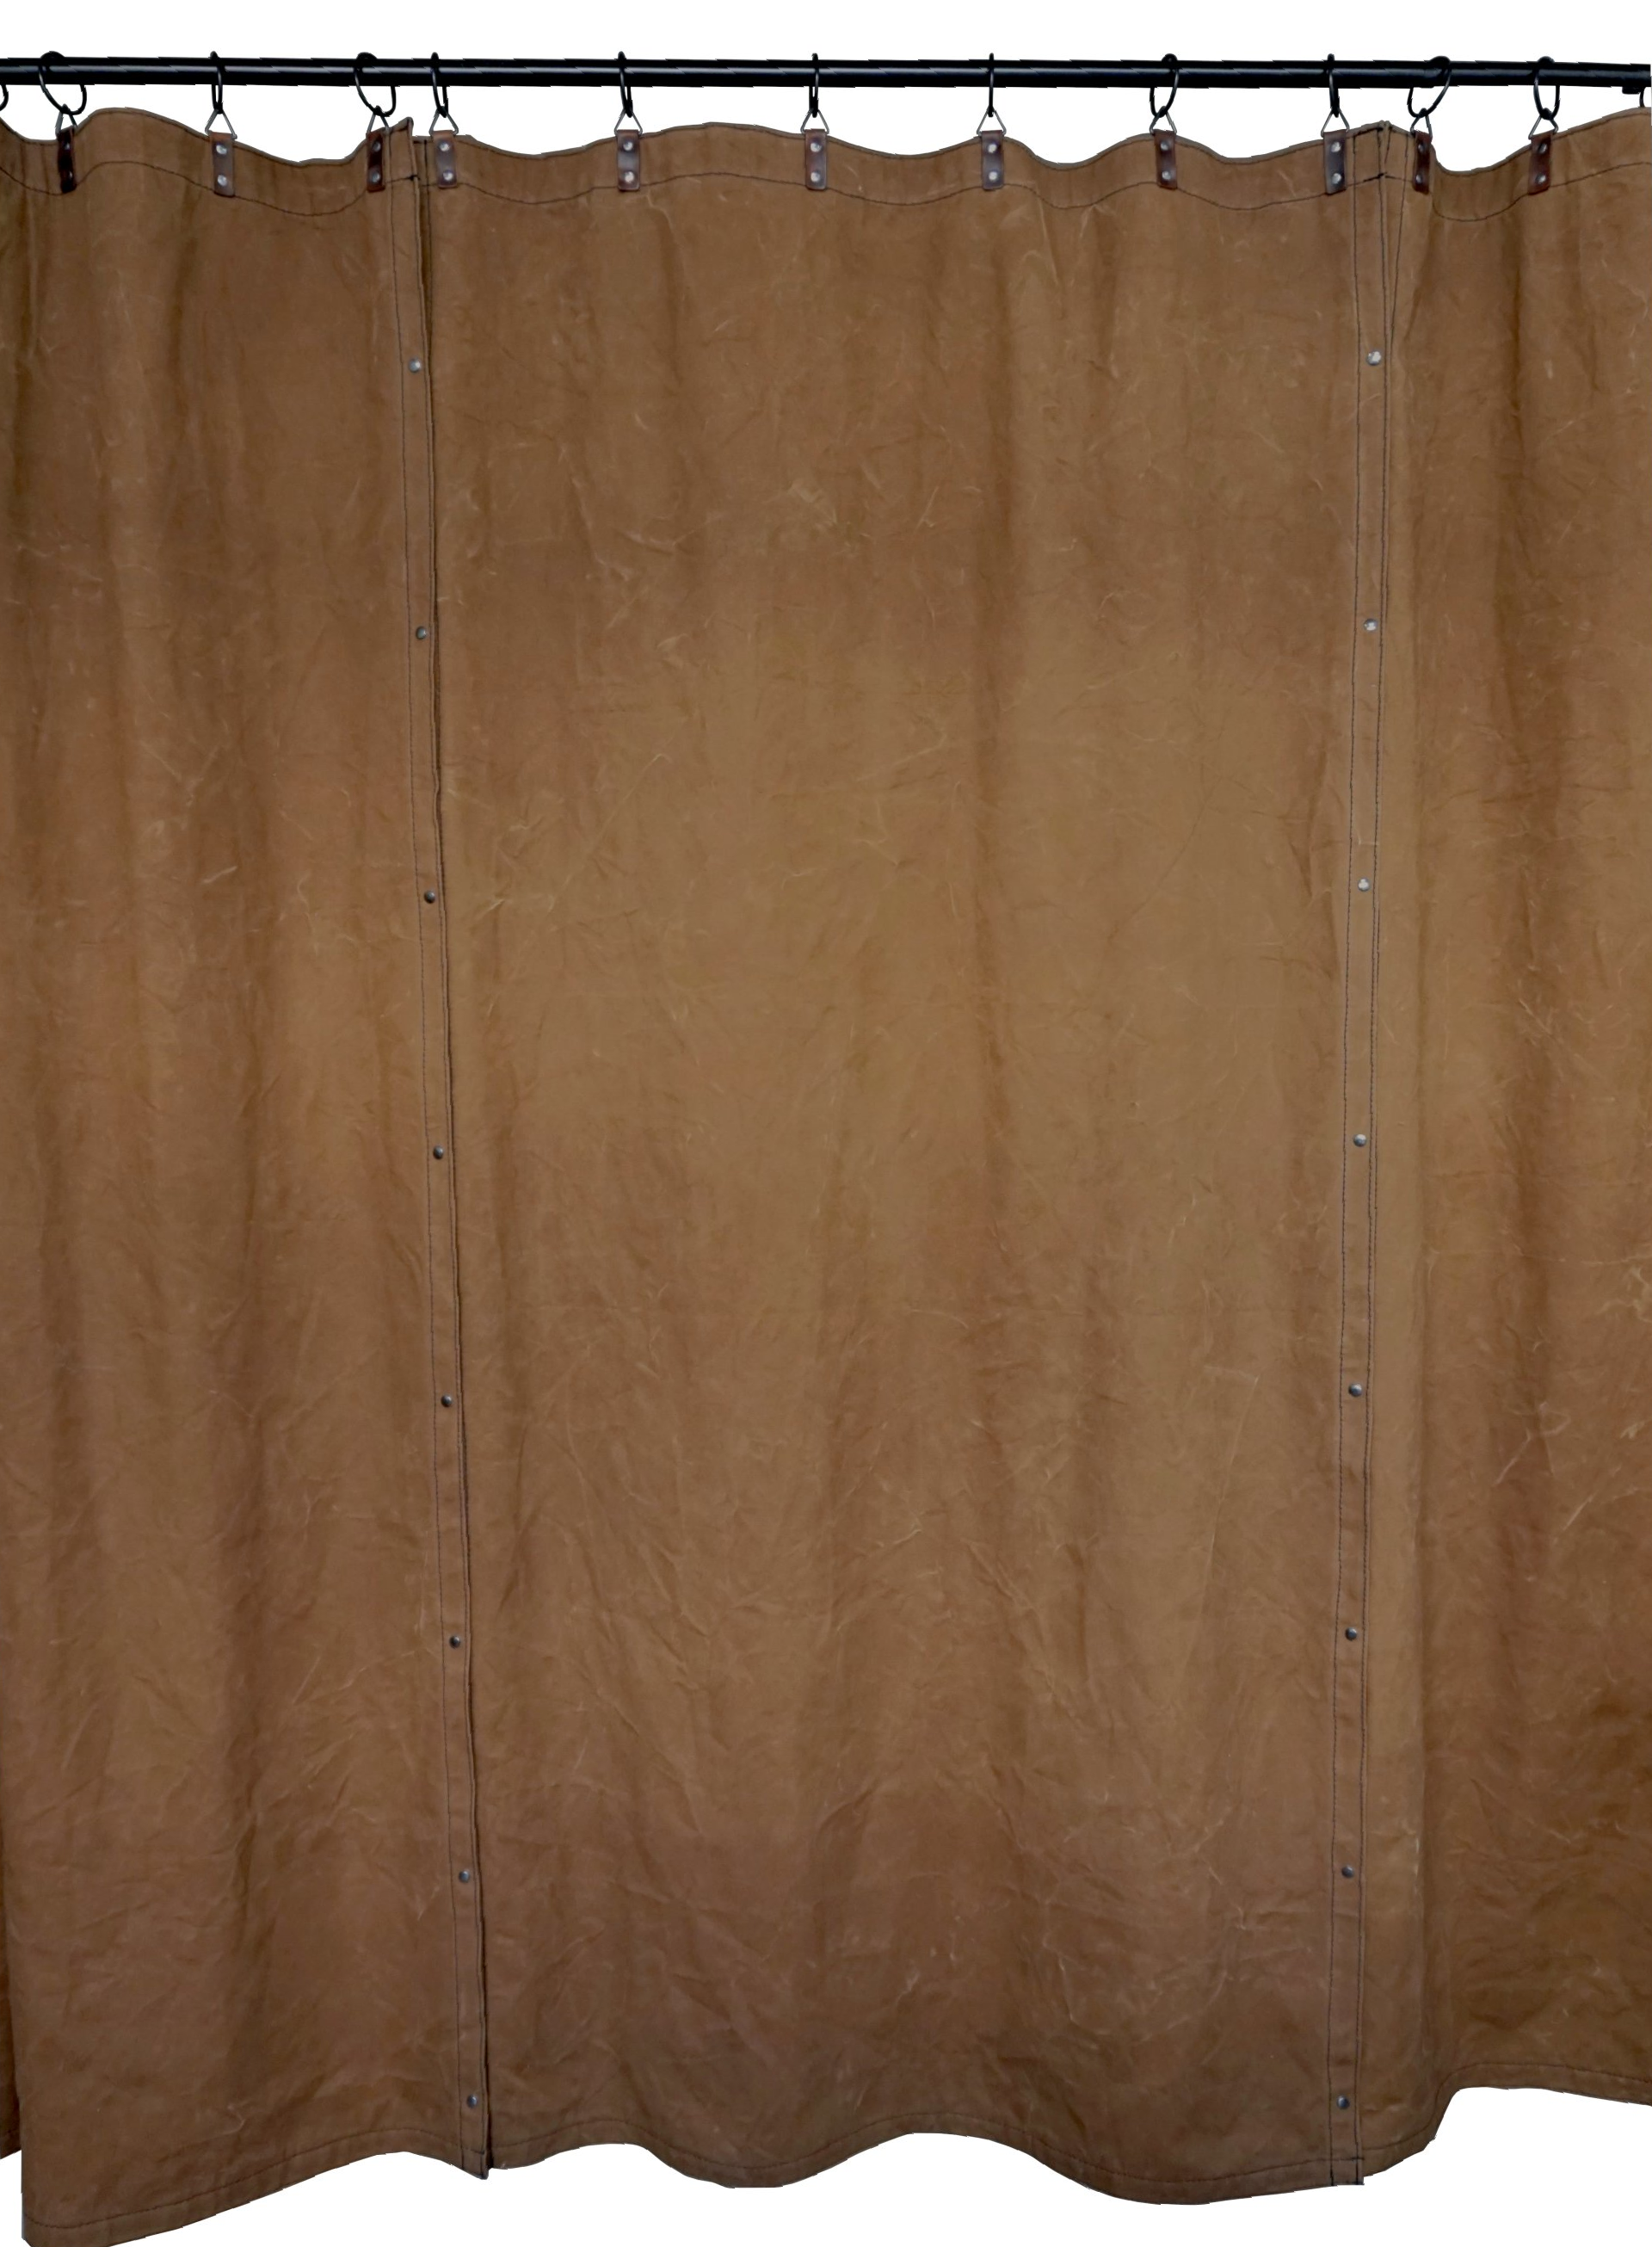 canvas gordijn - tochtgordijn - cafegordijn - paskamergordijn